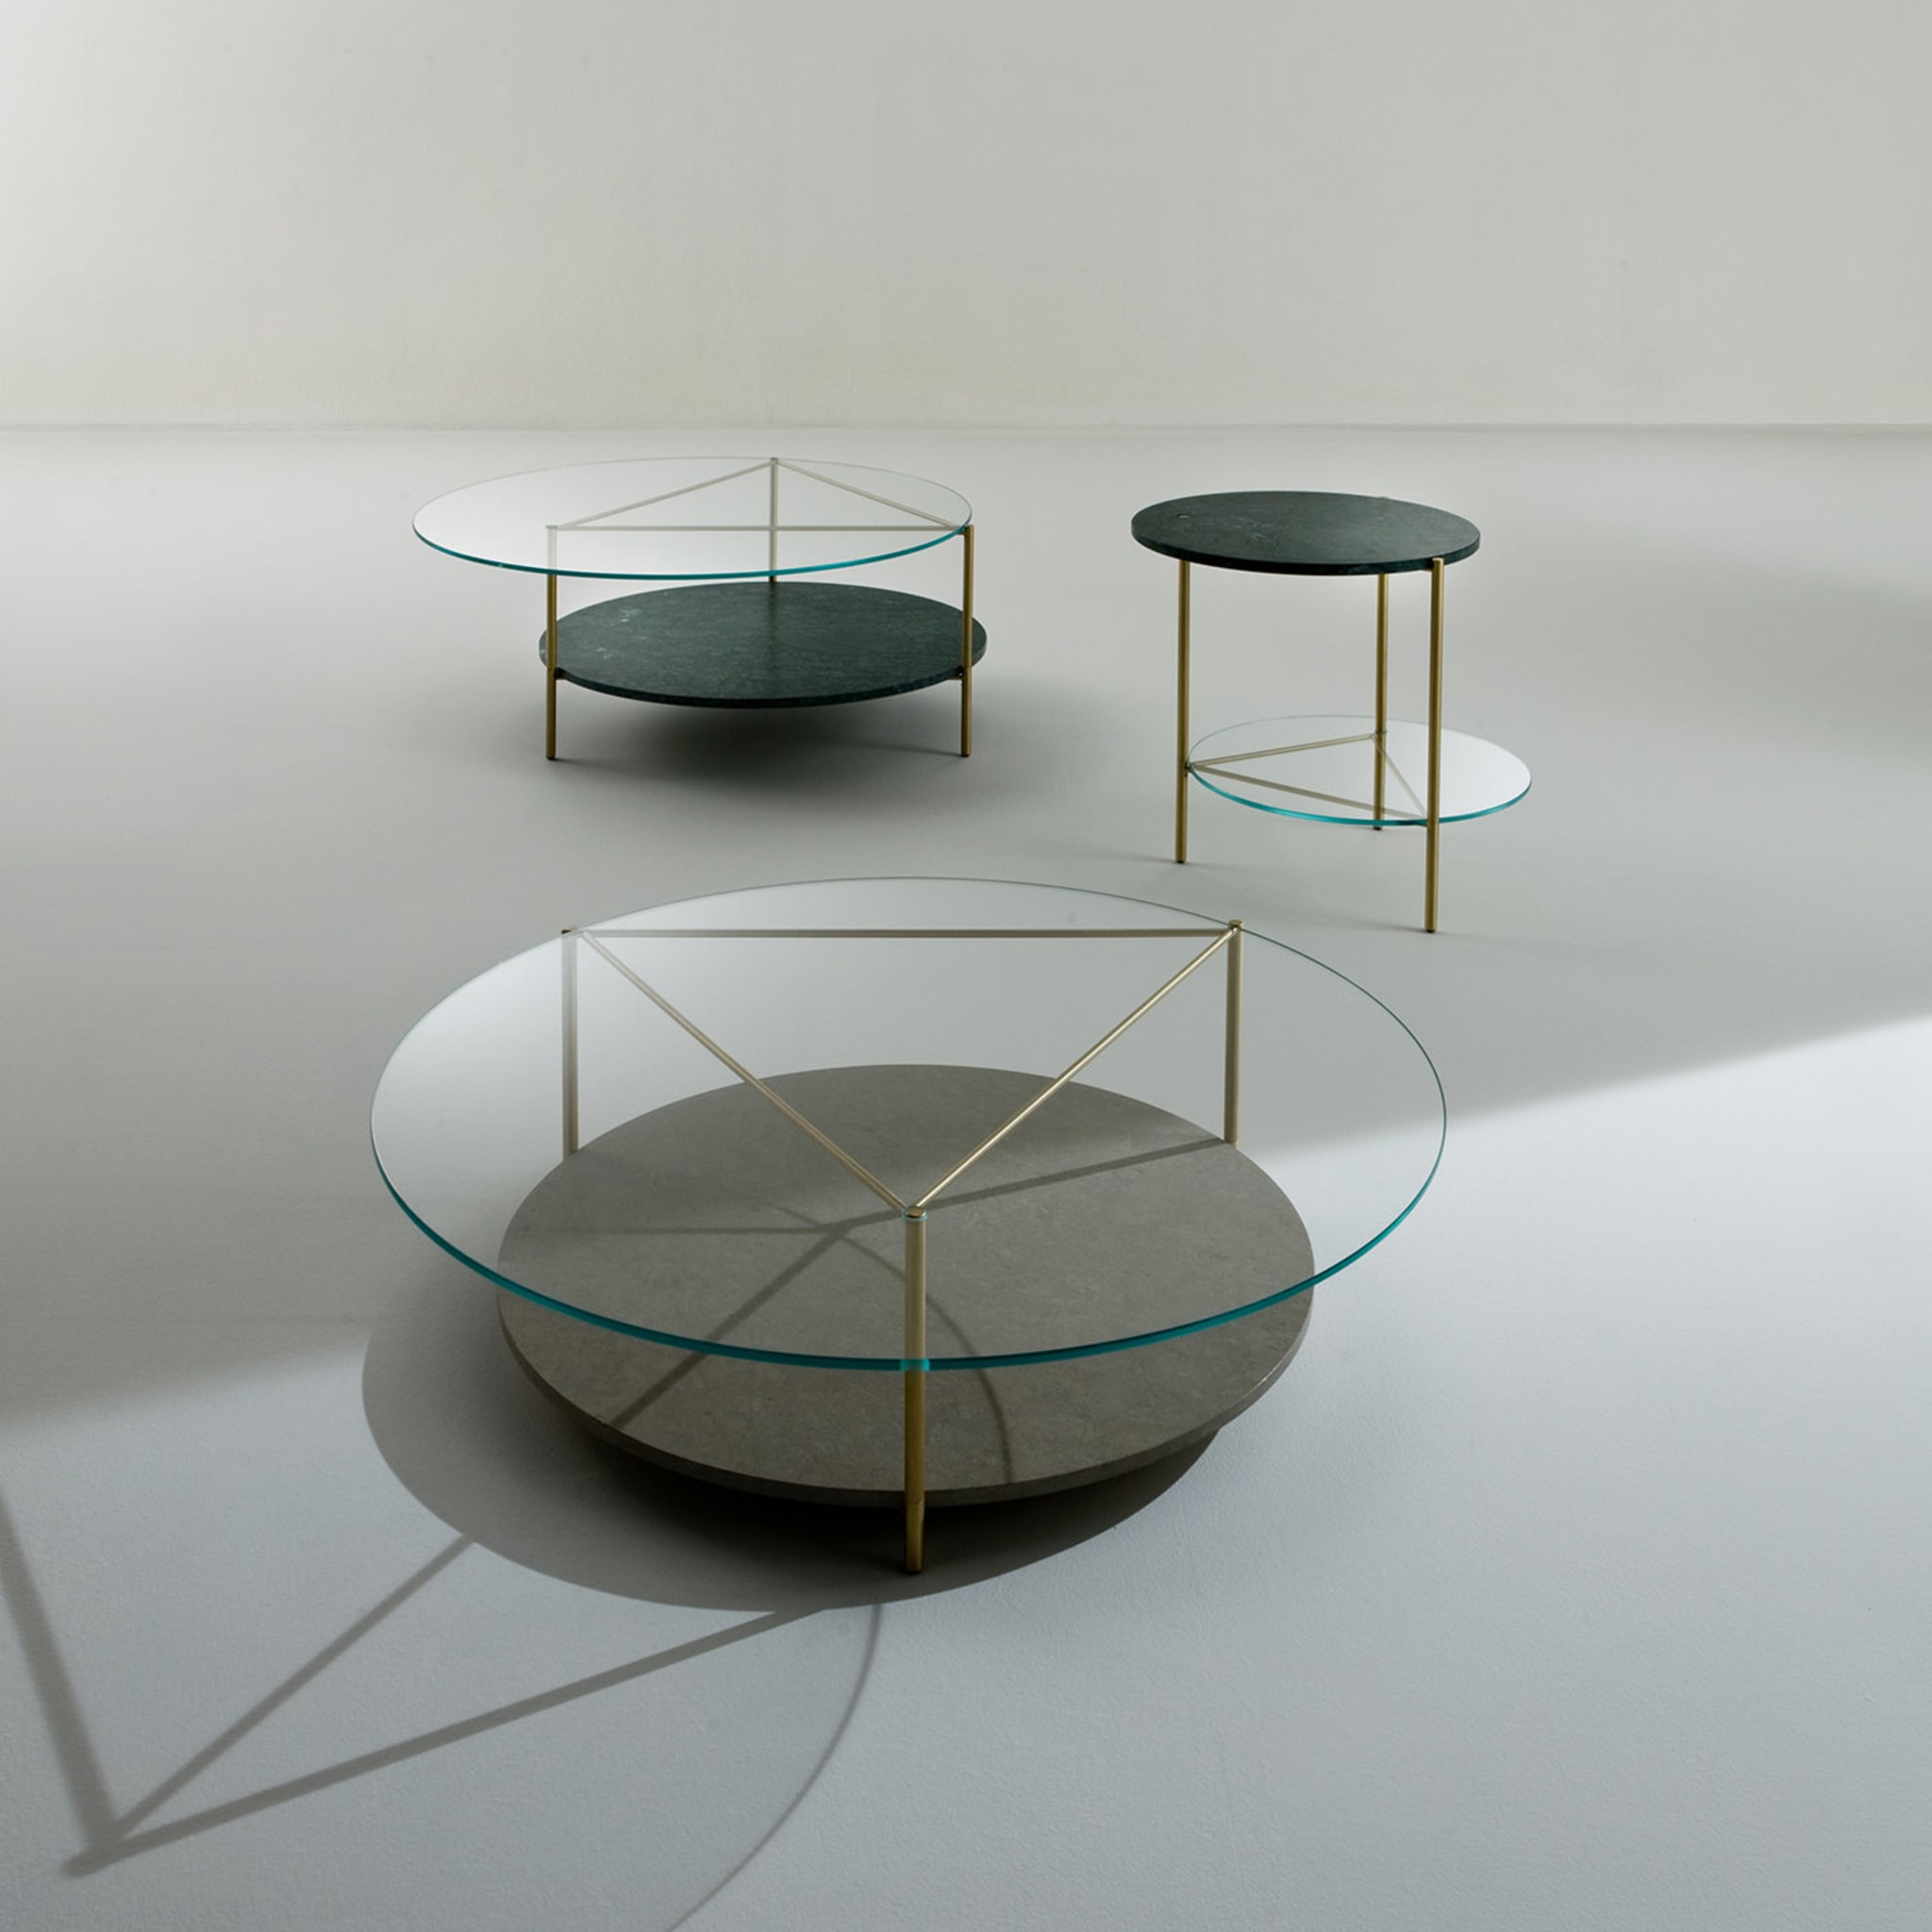 Echo Coffee Table by Bartoli Design - Alternative view 2